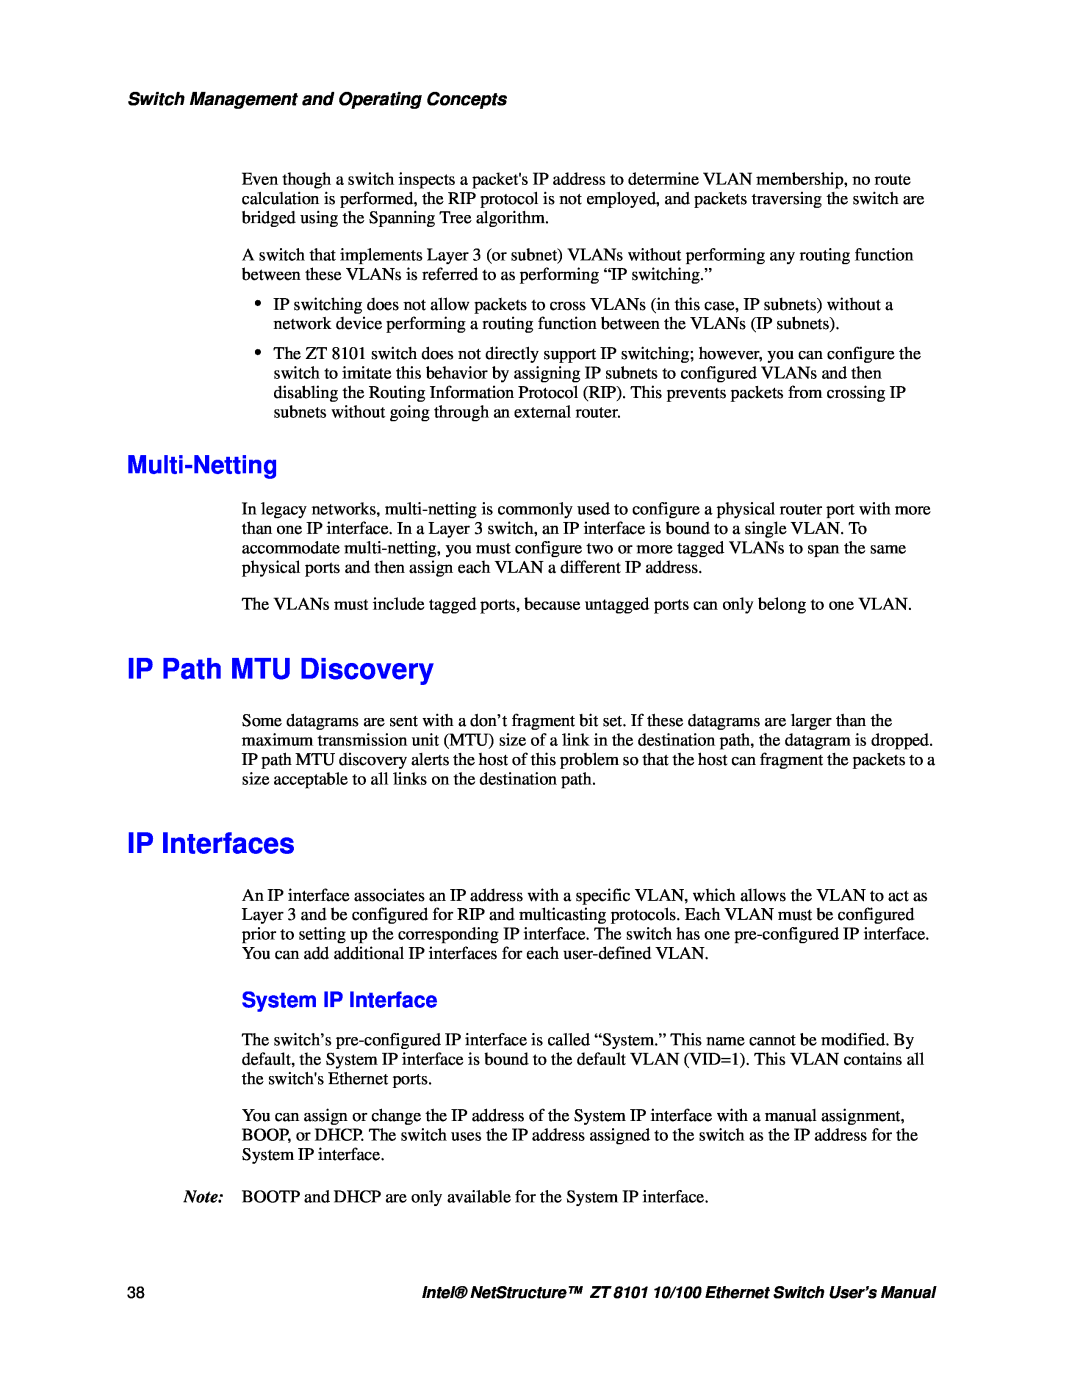 Intel ZT 8101 10/100 user manual IP Path MTU Discovery, IP Interfaces, Multi-Netting, System IP Interface 